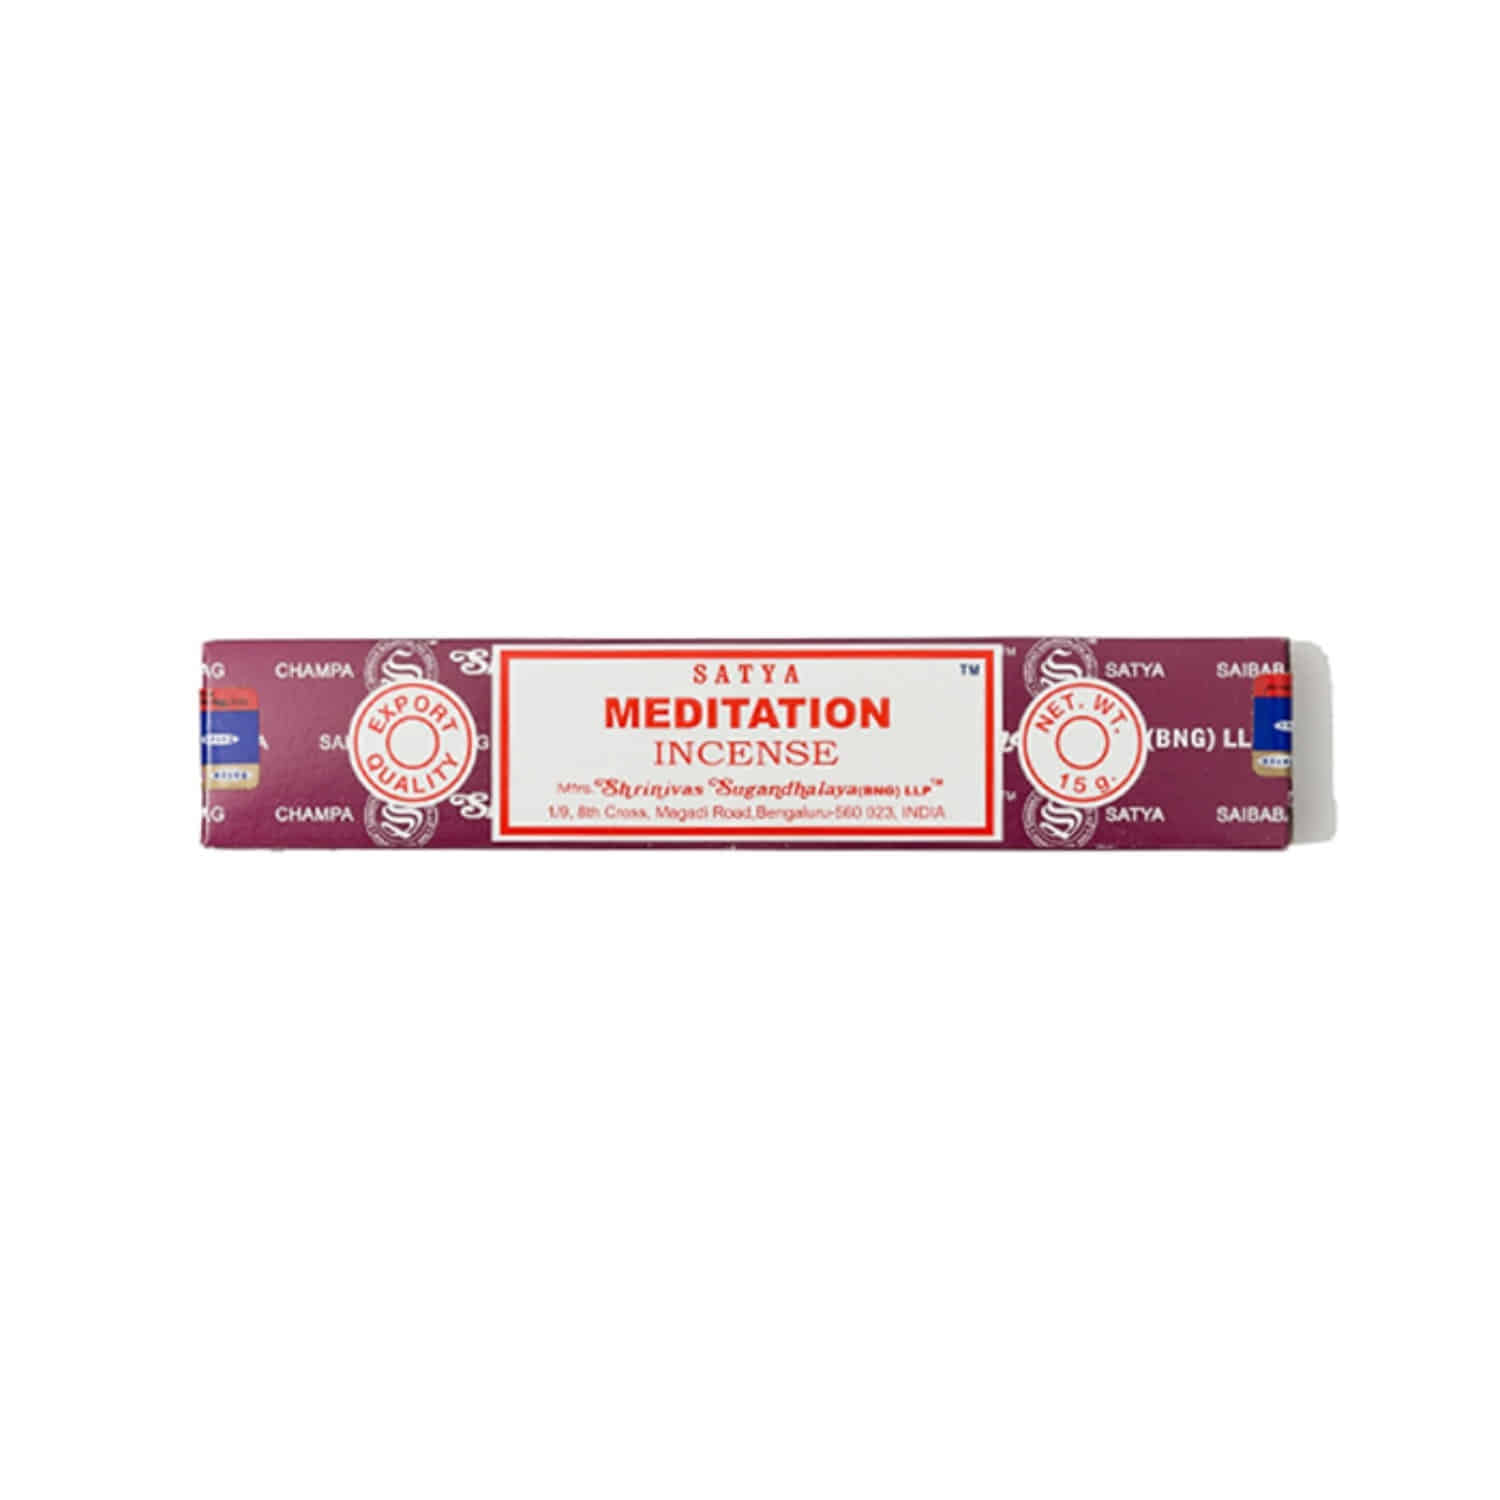 satya meditation incense stick